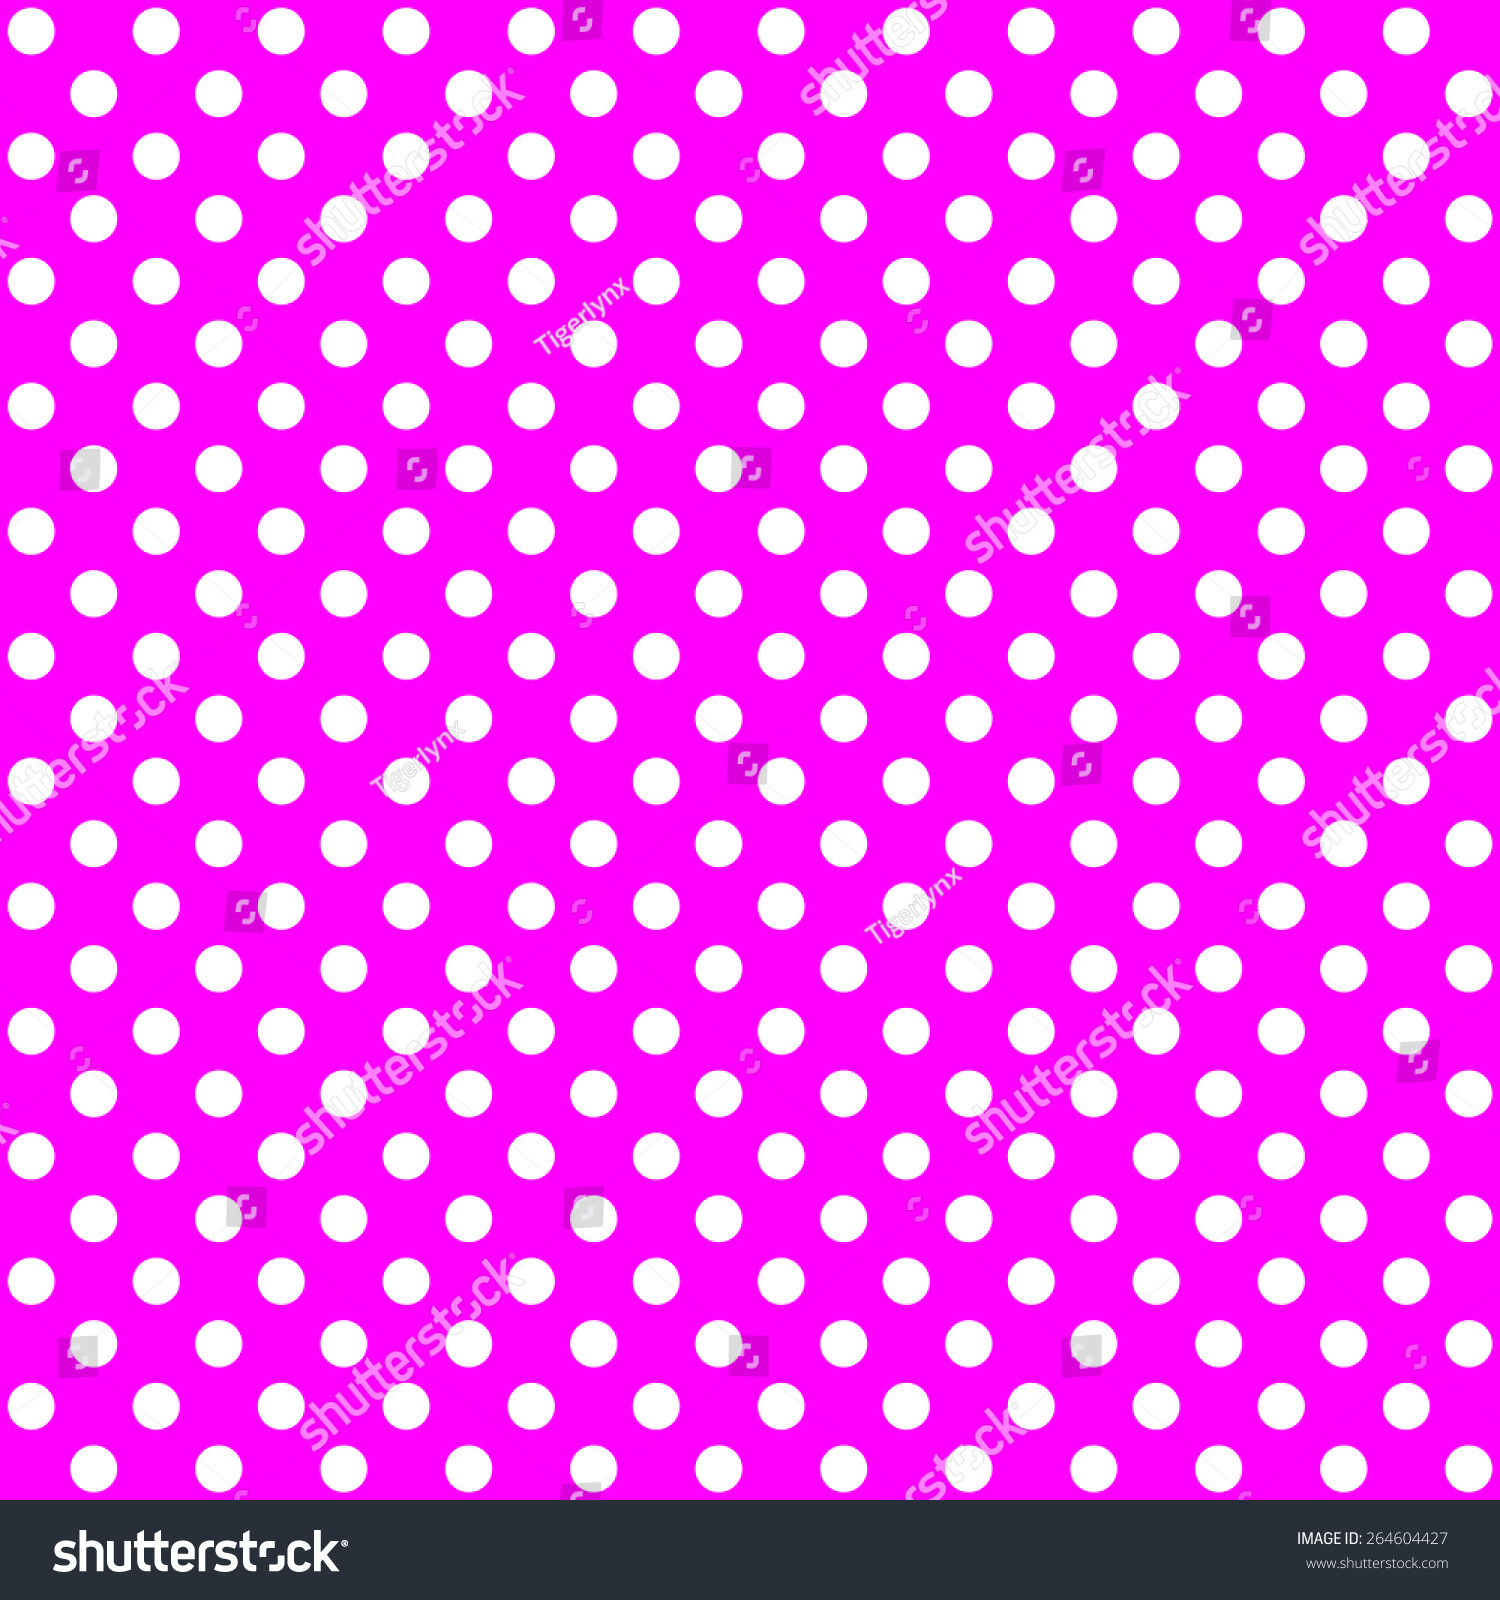 This Seamless Repeating Polka Dot Spotty Stock Illustration 264604427